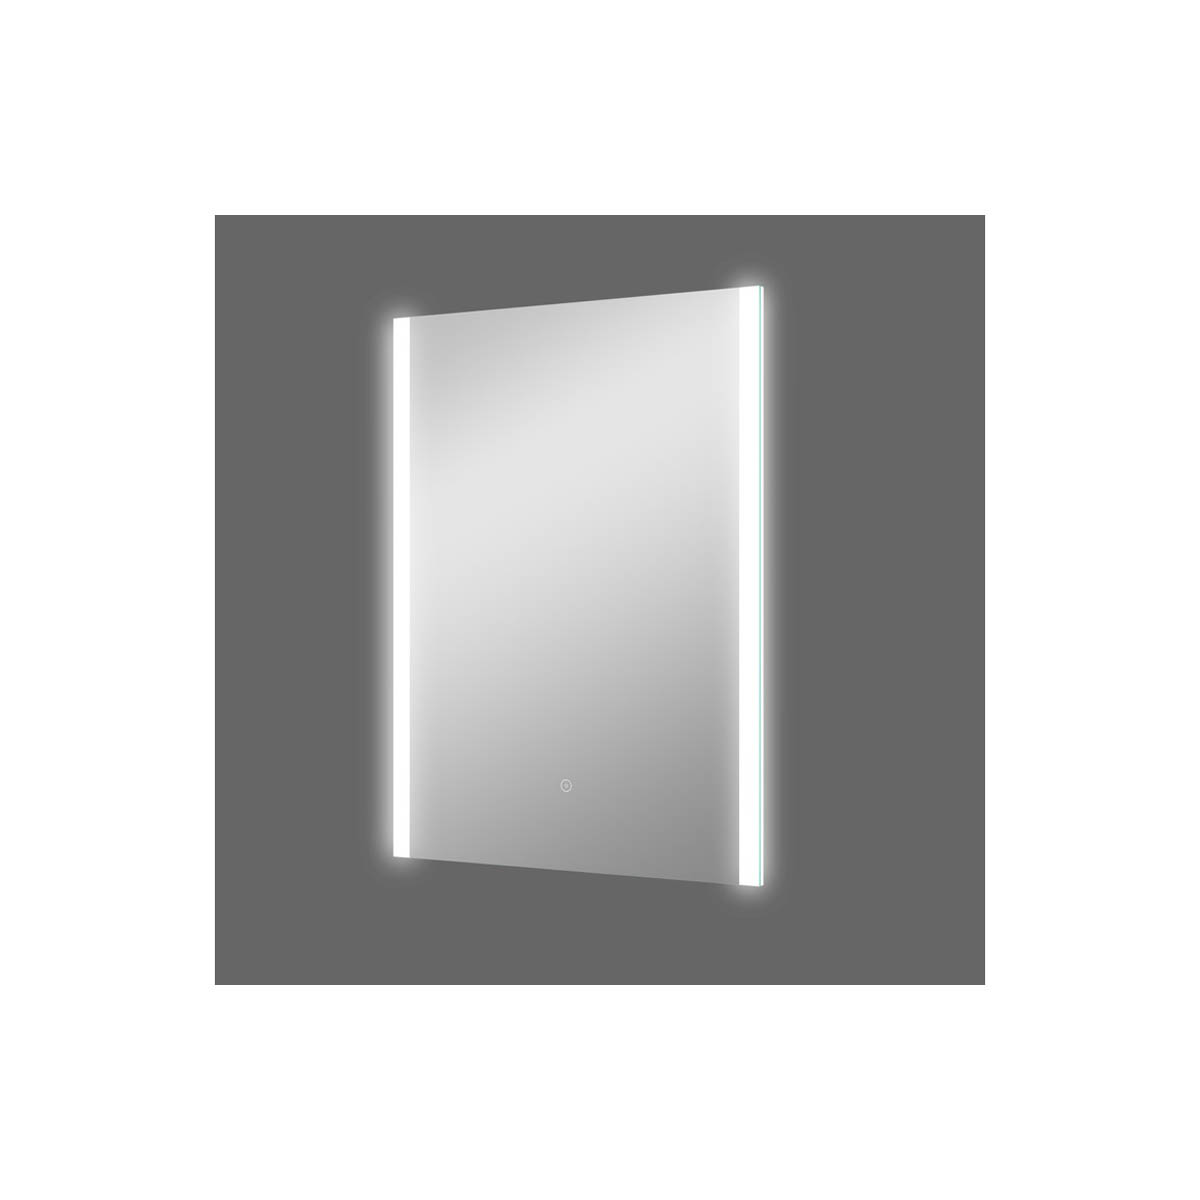 Ari Design Kai 1200x600mm Rectangle Front-Lit LED Mirror